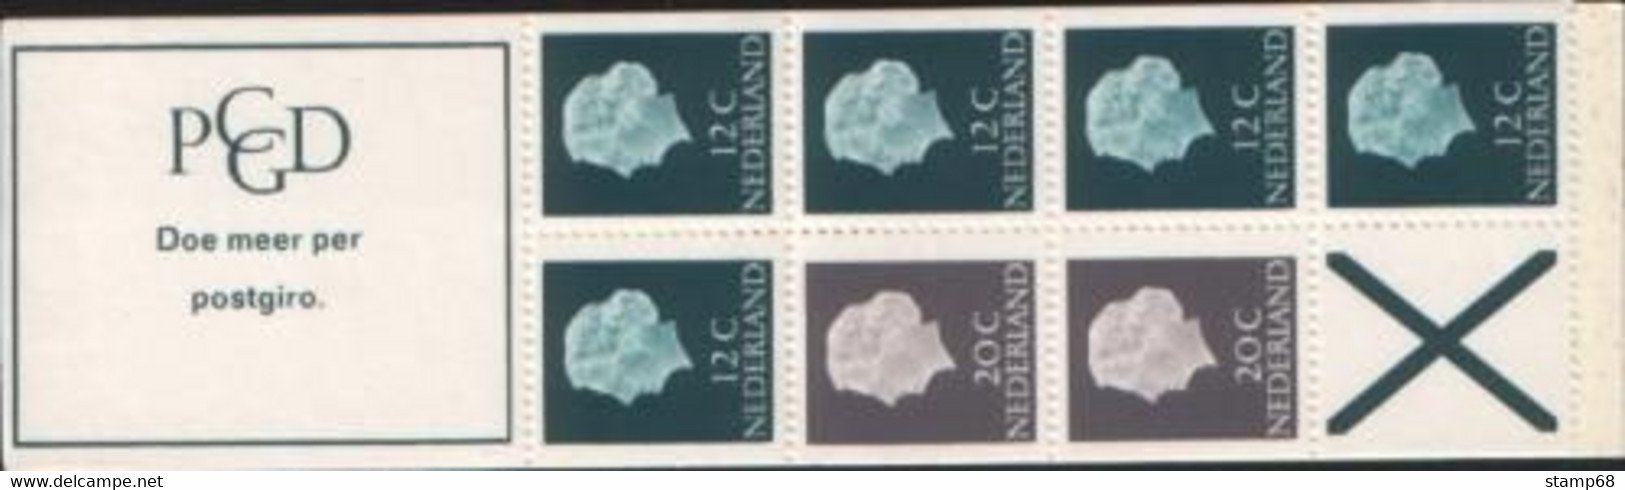 Nederland NVPH PB7bF Postzegelboekje 1968 MNH Postfris - Booklets & Coils